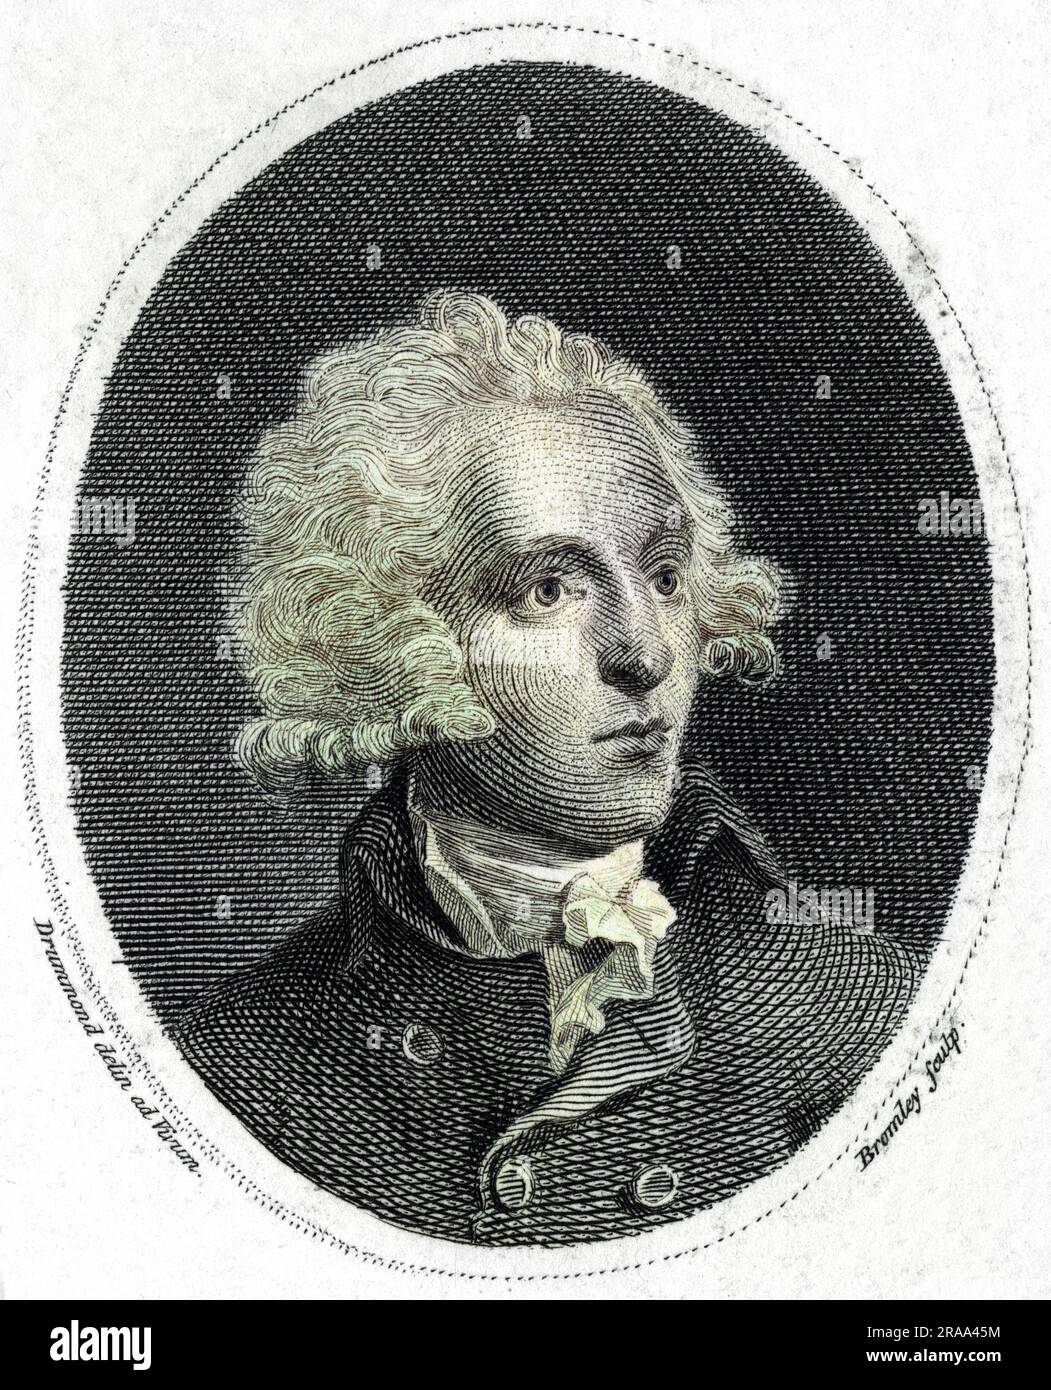 SIR JOHN SINCLAIR statesman etc     Date: 1754 - 1835 Stock Photo